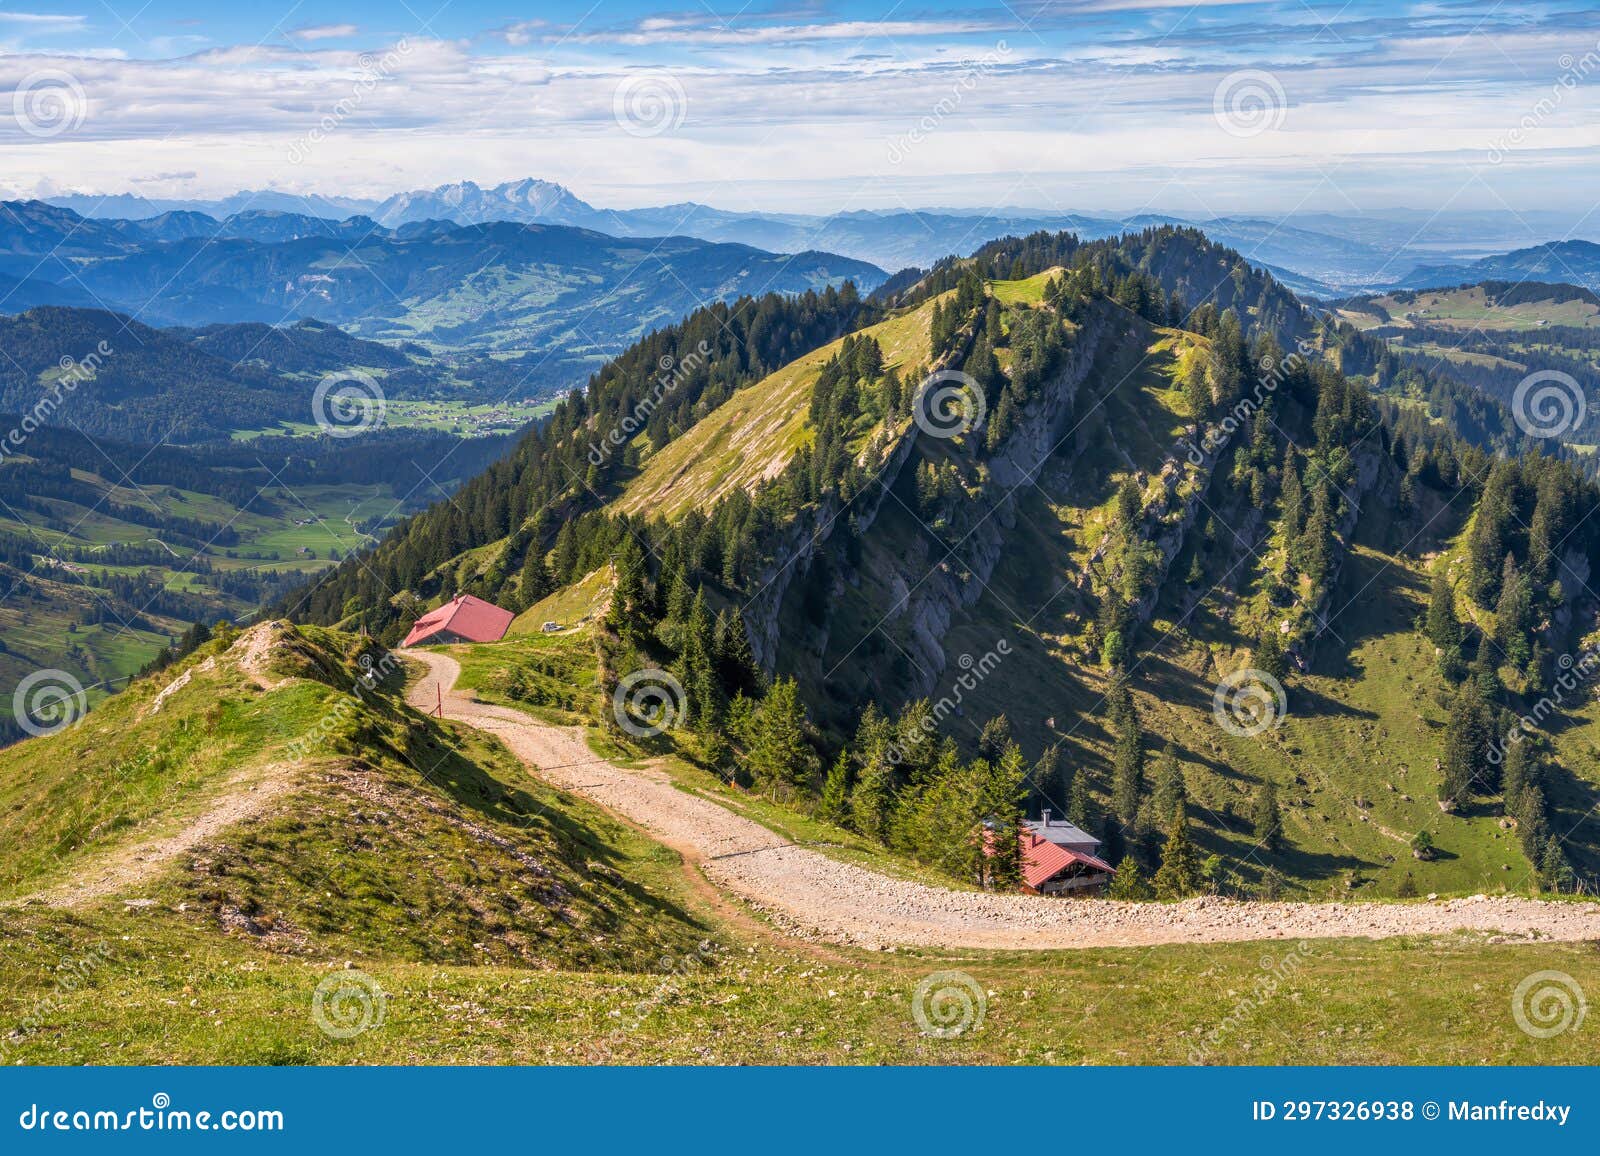 view from the hochgrat mountain near oberstaufen